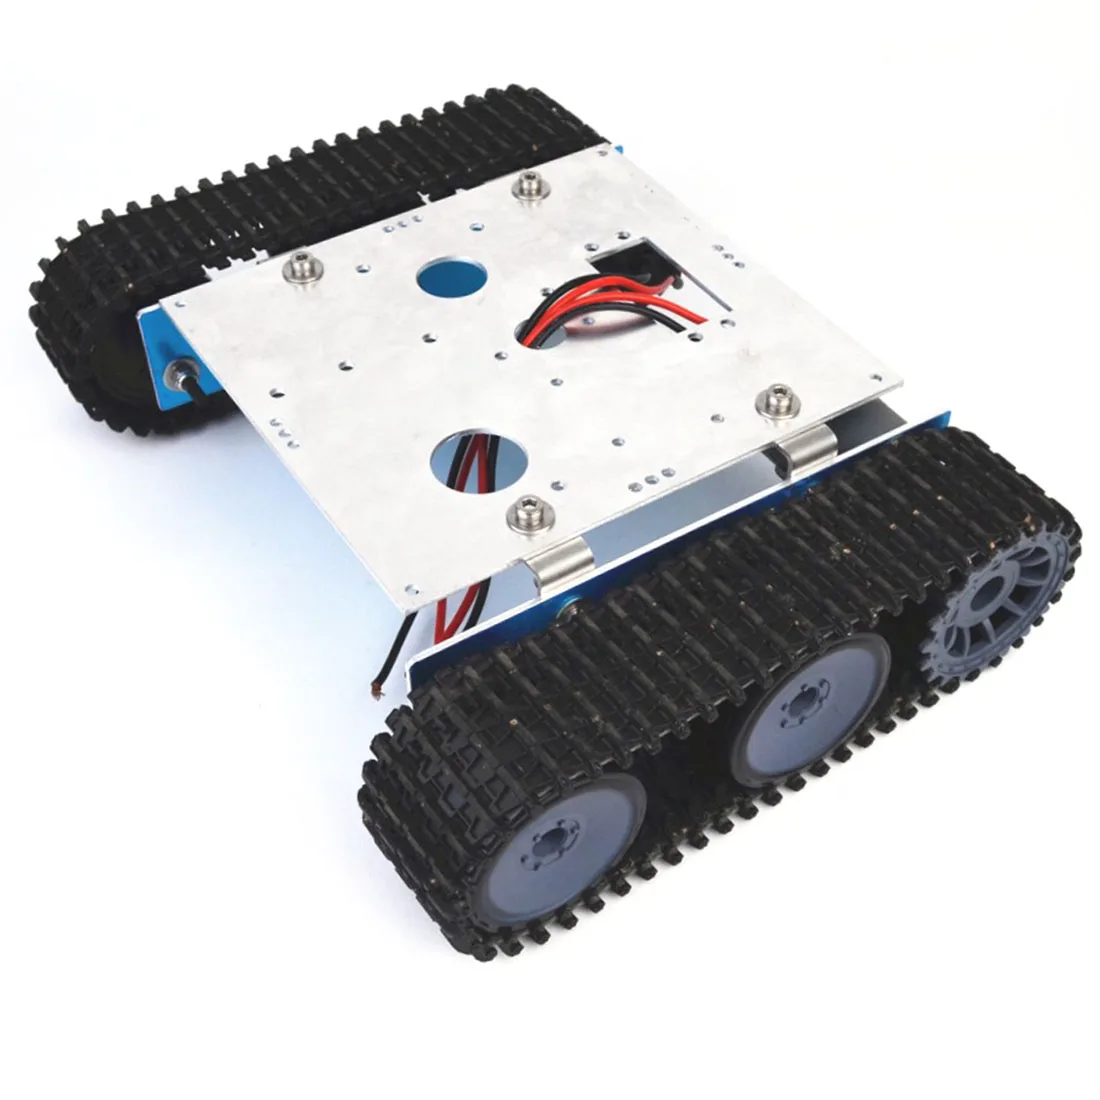 New DIY Aluminium Alloy Tank Robot Caterpillar Vehicle Platform Chassis Assembly Kit For Arduino